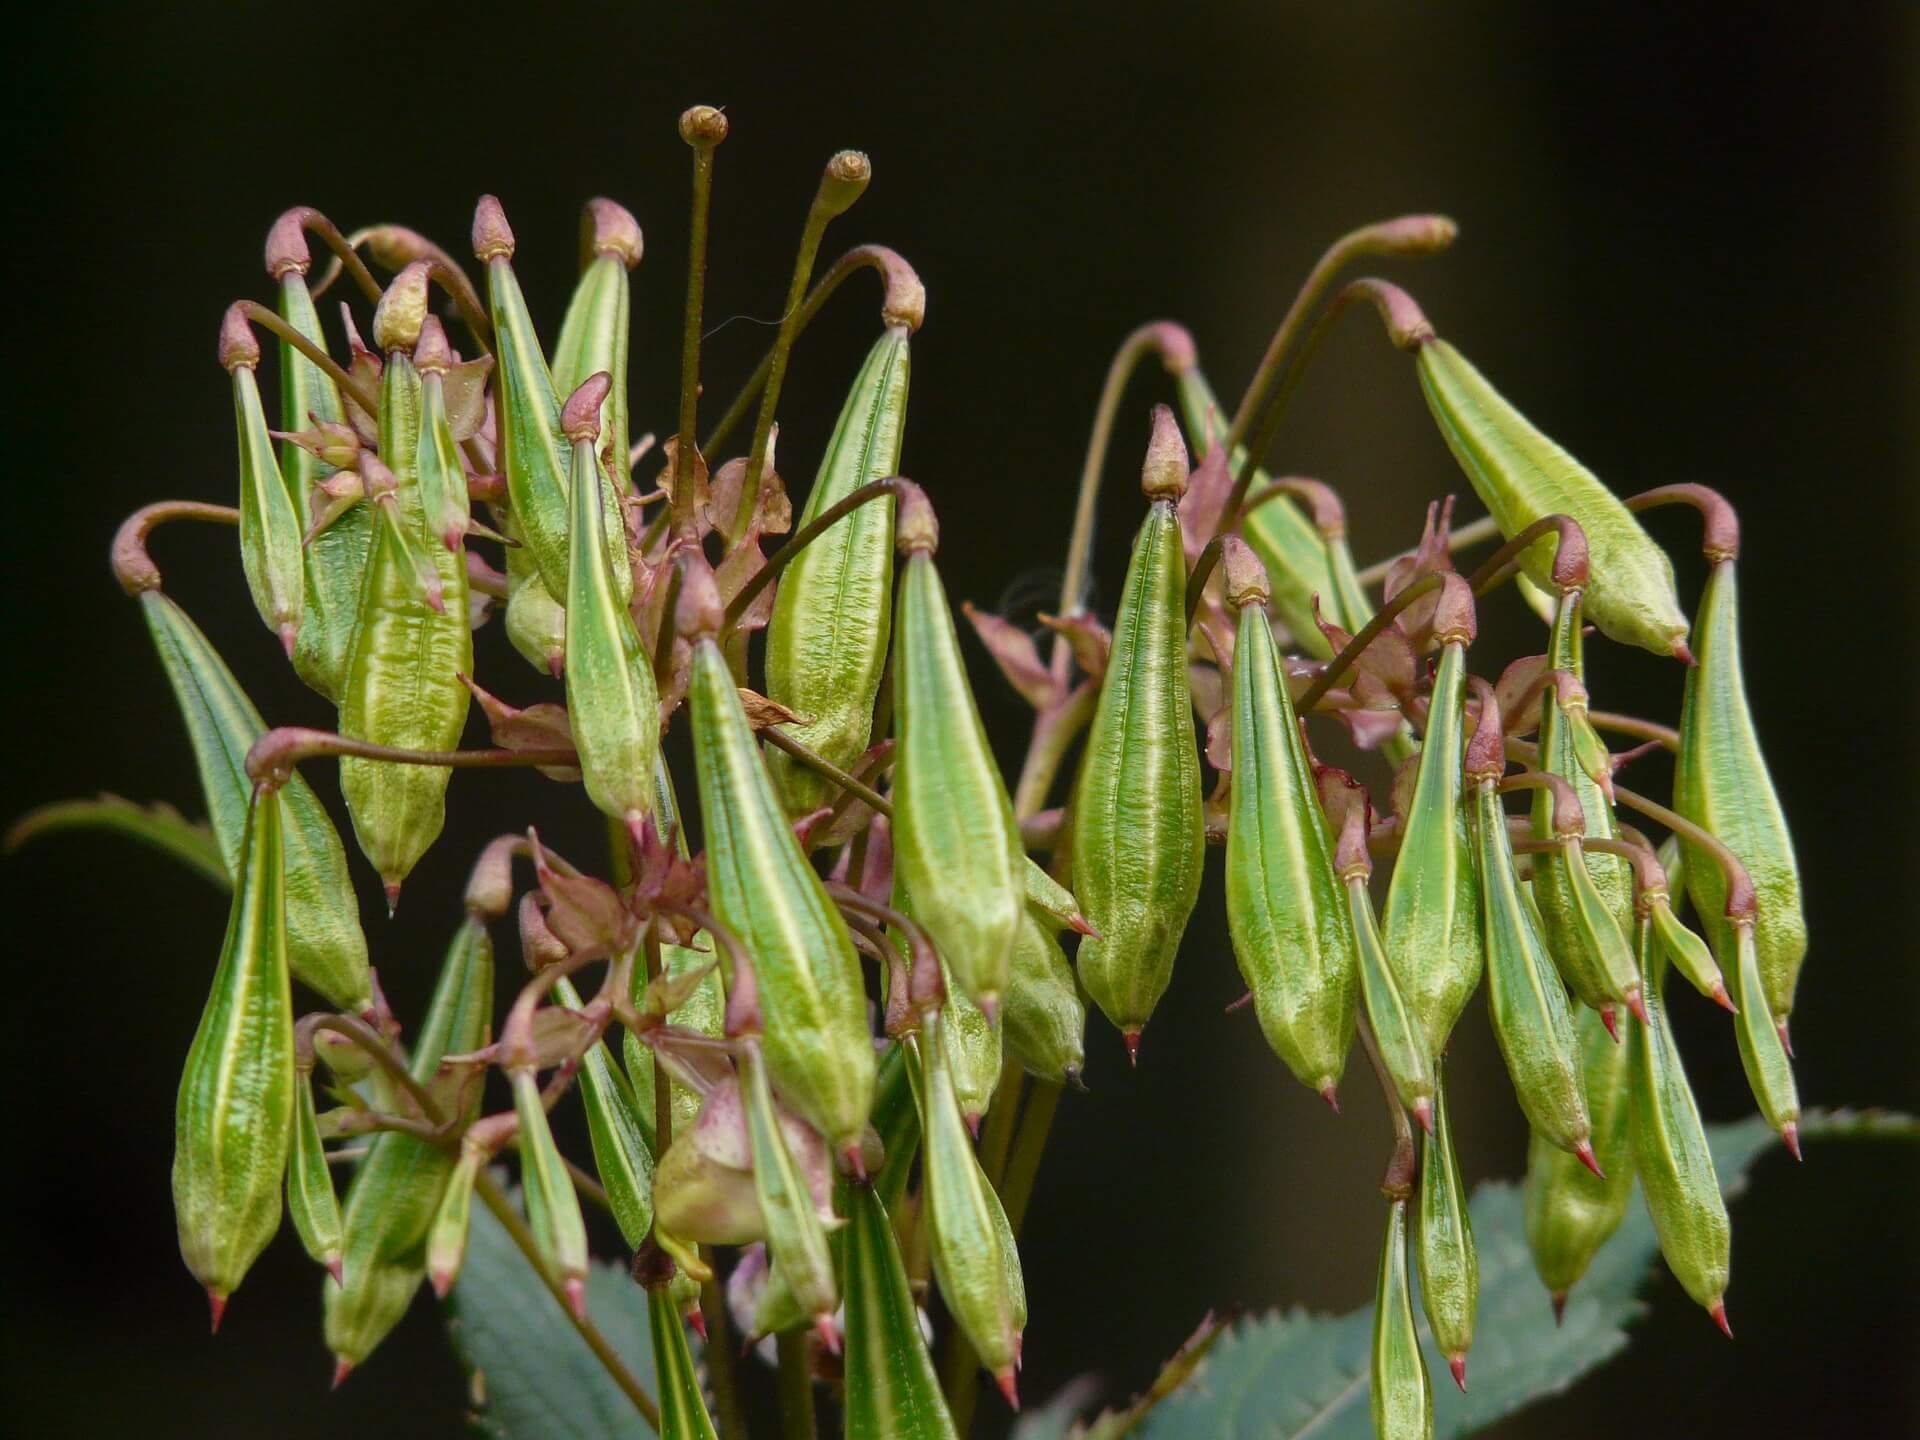 Himalayan balsam seed